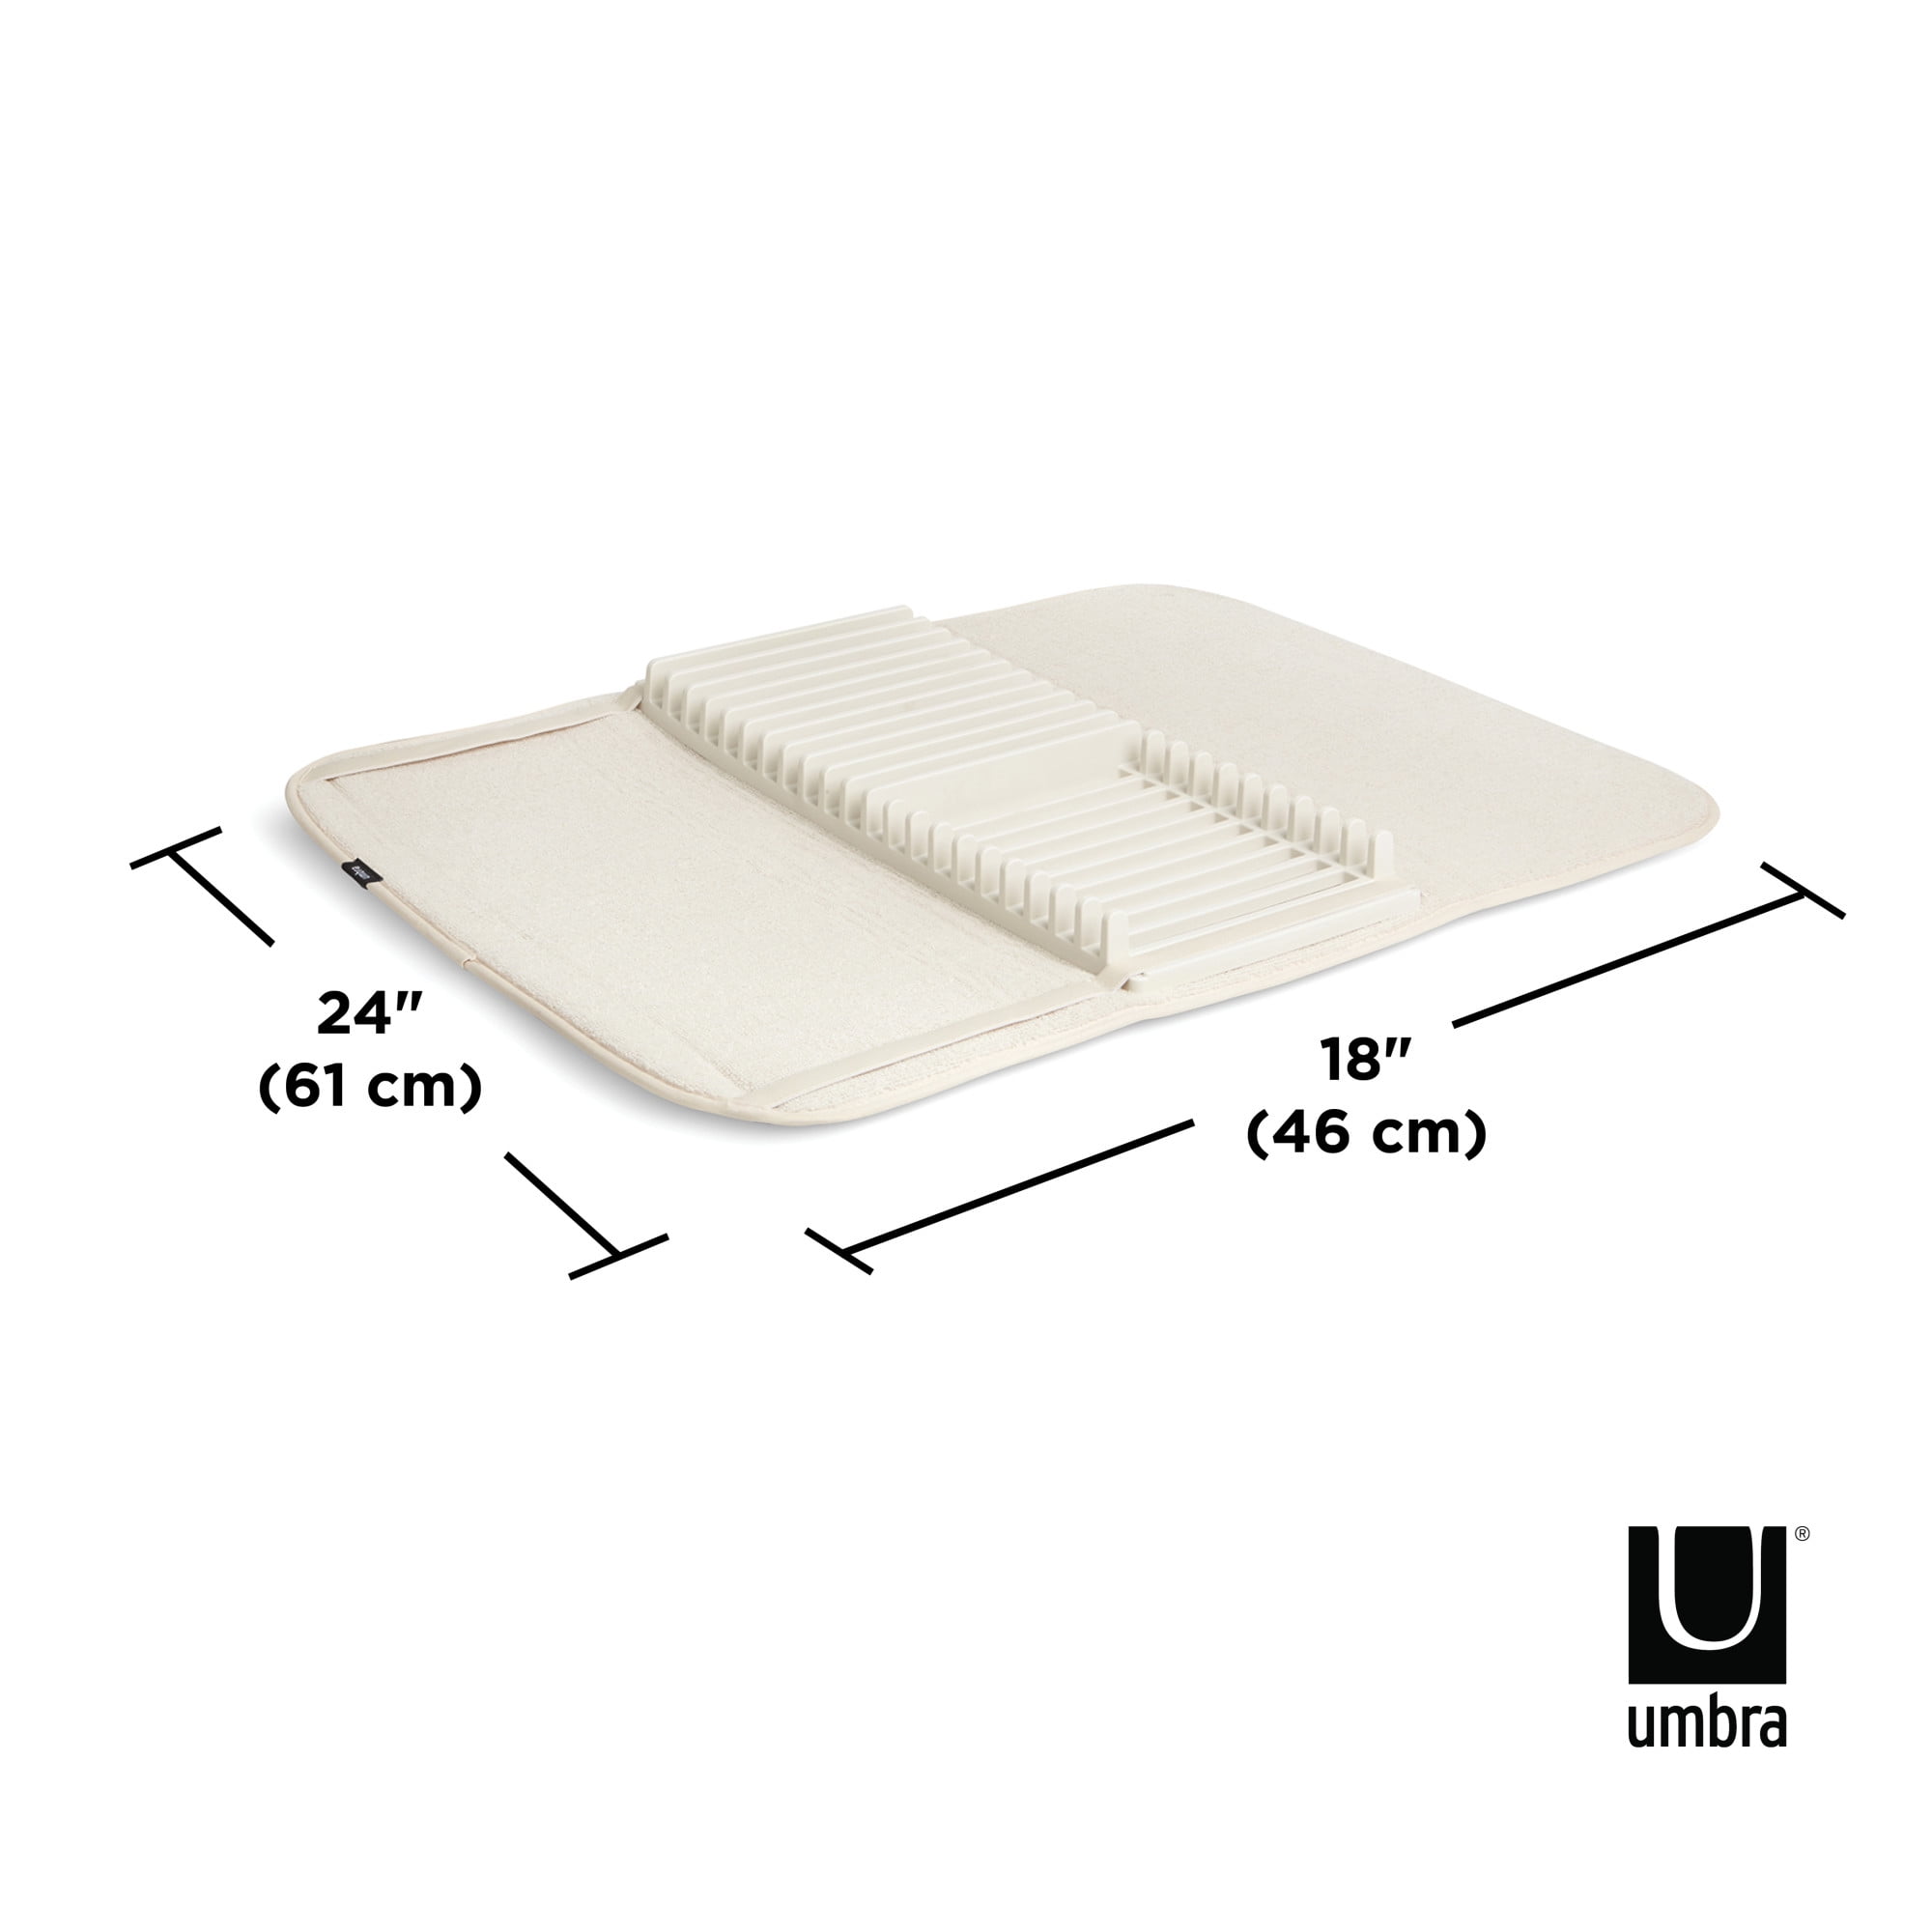 Umbra Linen Udry Folding Microfiber Dish Drying Mat by World Market